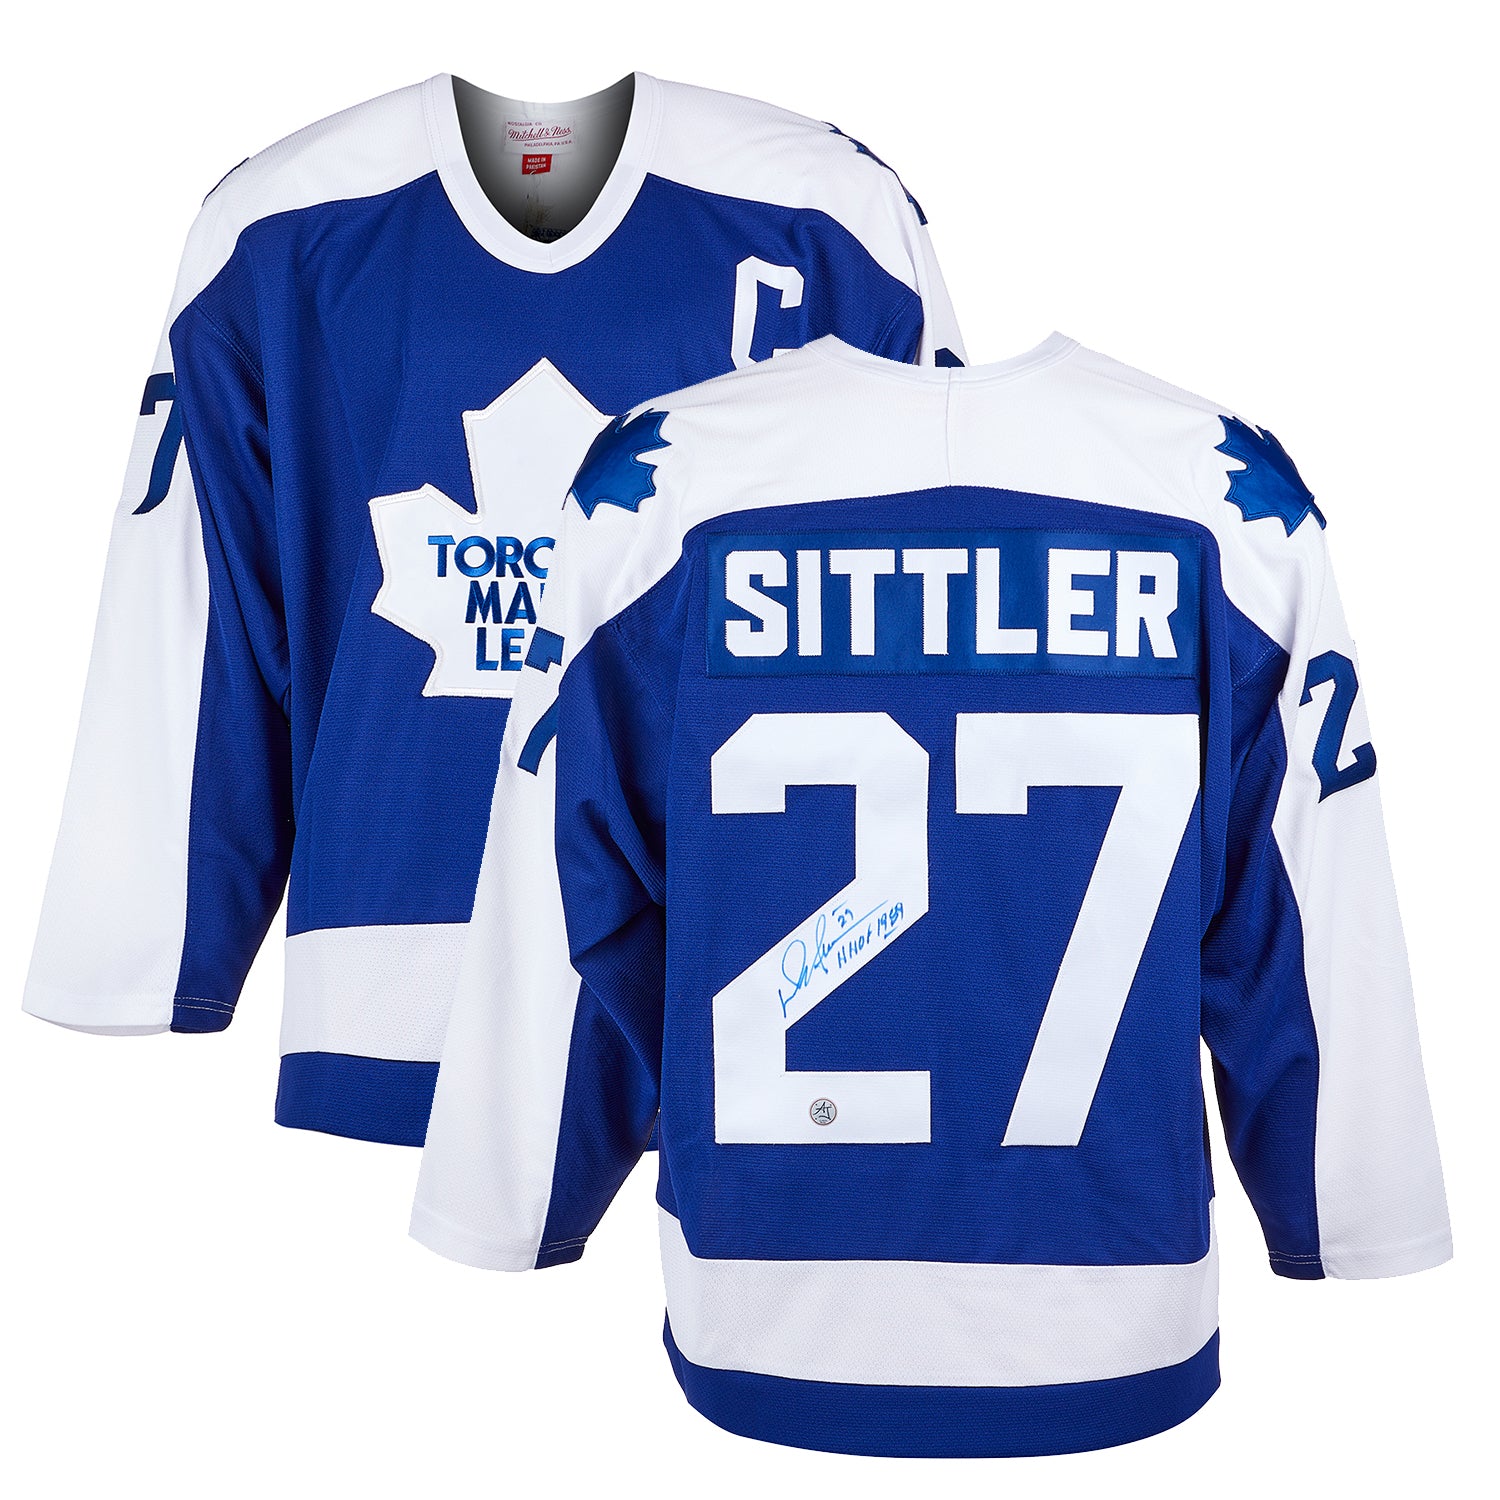 Darryl Sittler Signed Toronto Maple Leafs Mitchell & Ness Jersey